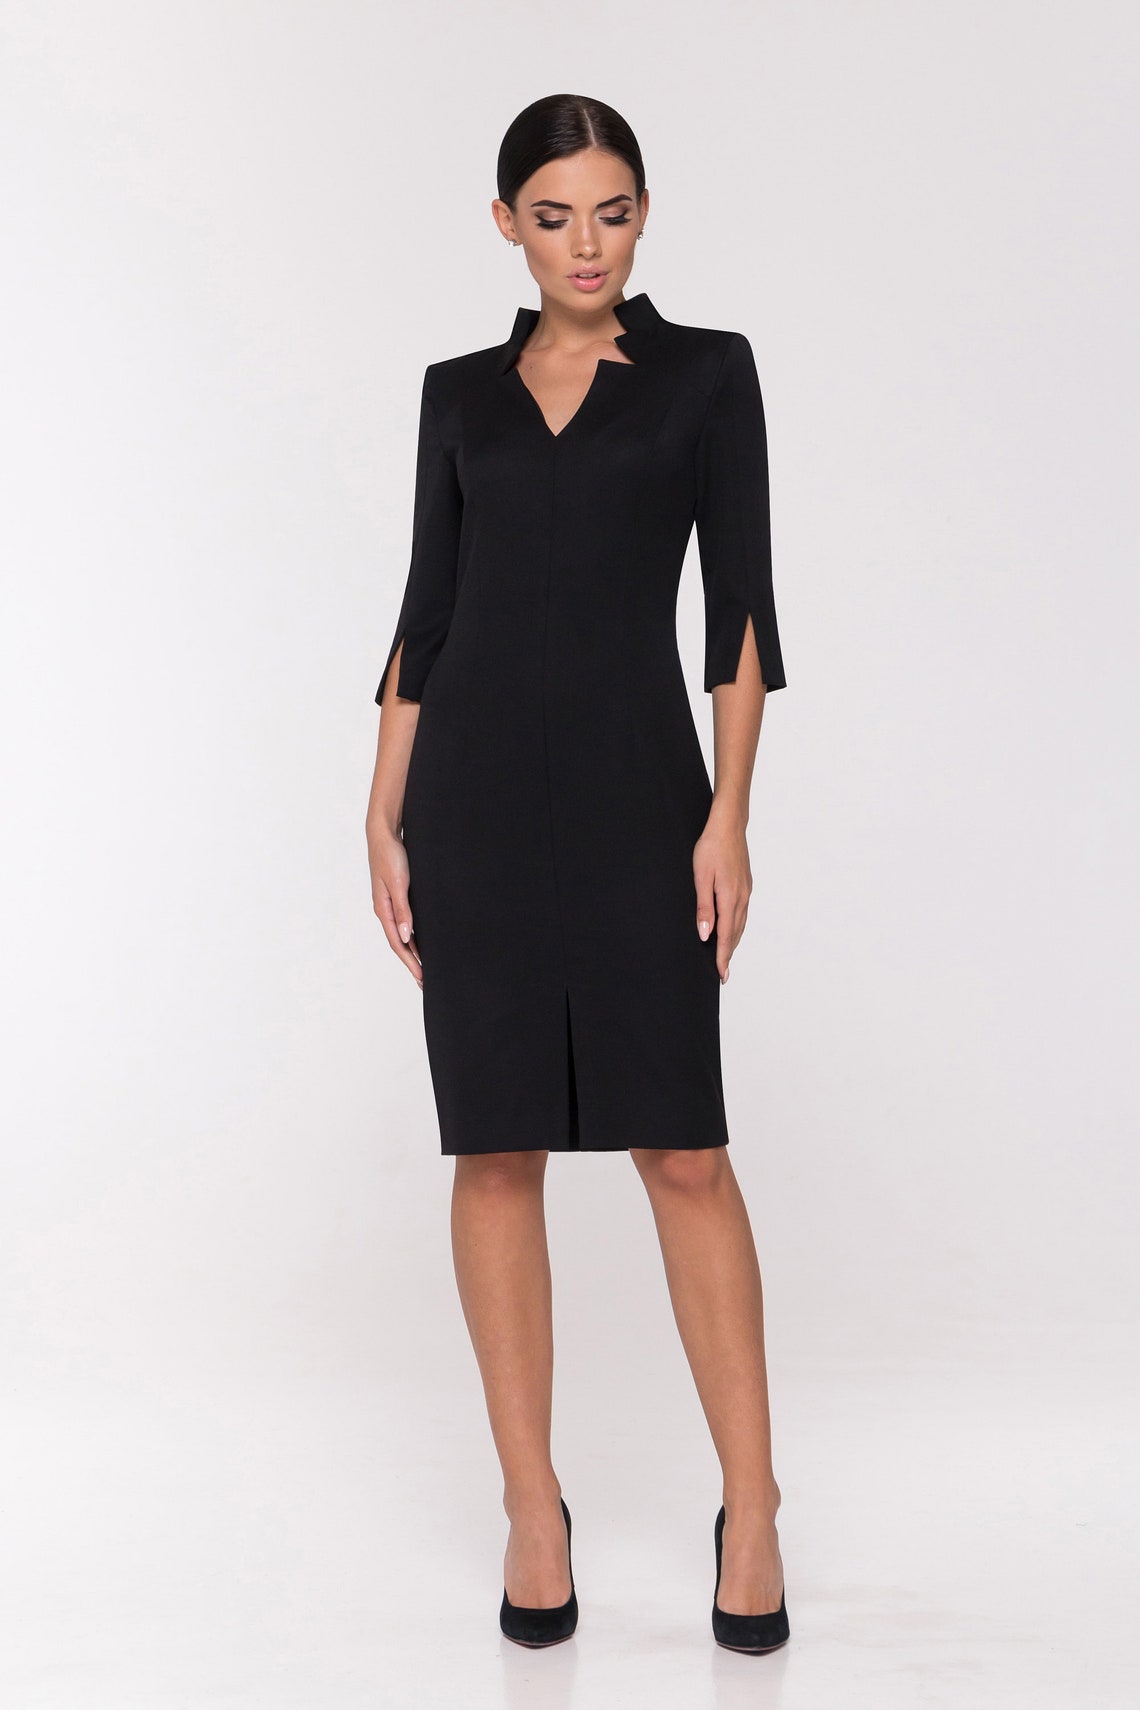 Black pencil high neck midi dress Dresses for women Cocktail | Etsy